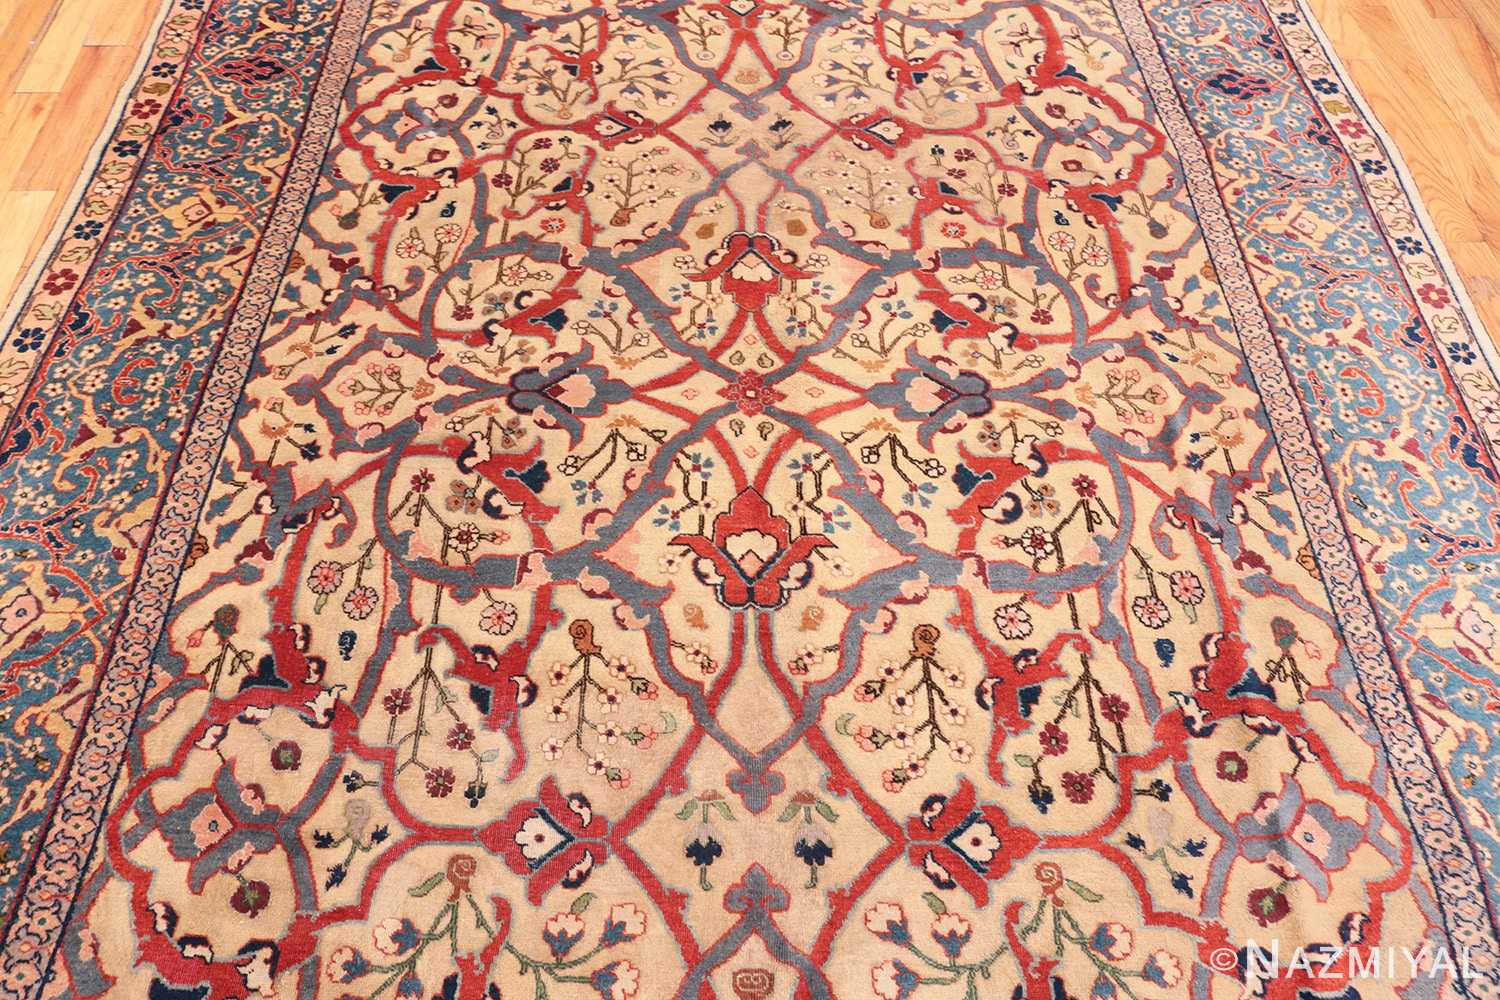 Field Antique Persian Tabriz rug 47432 by Nazmiyal